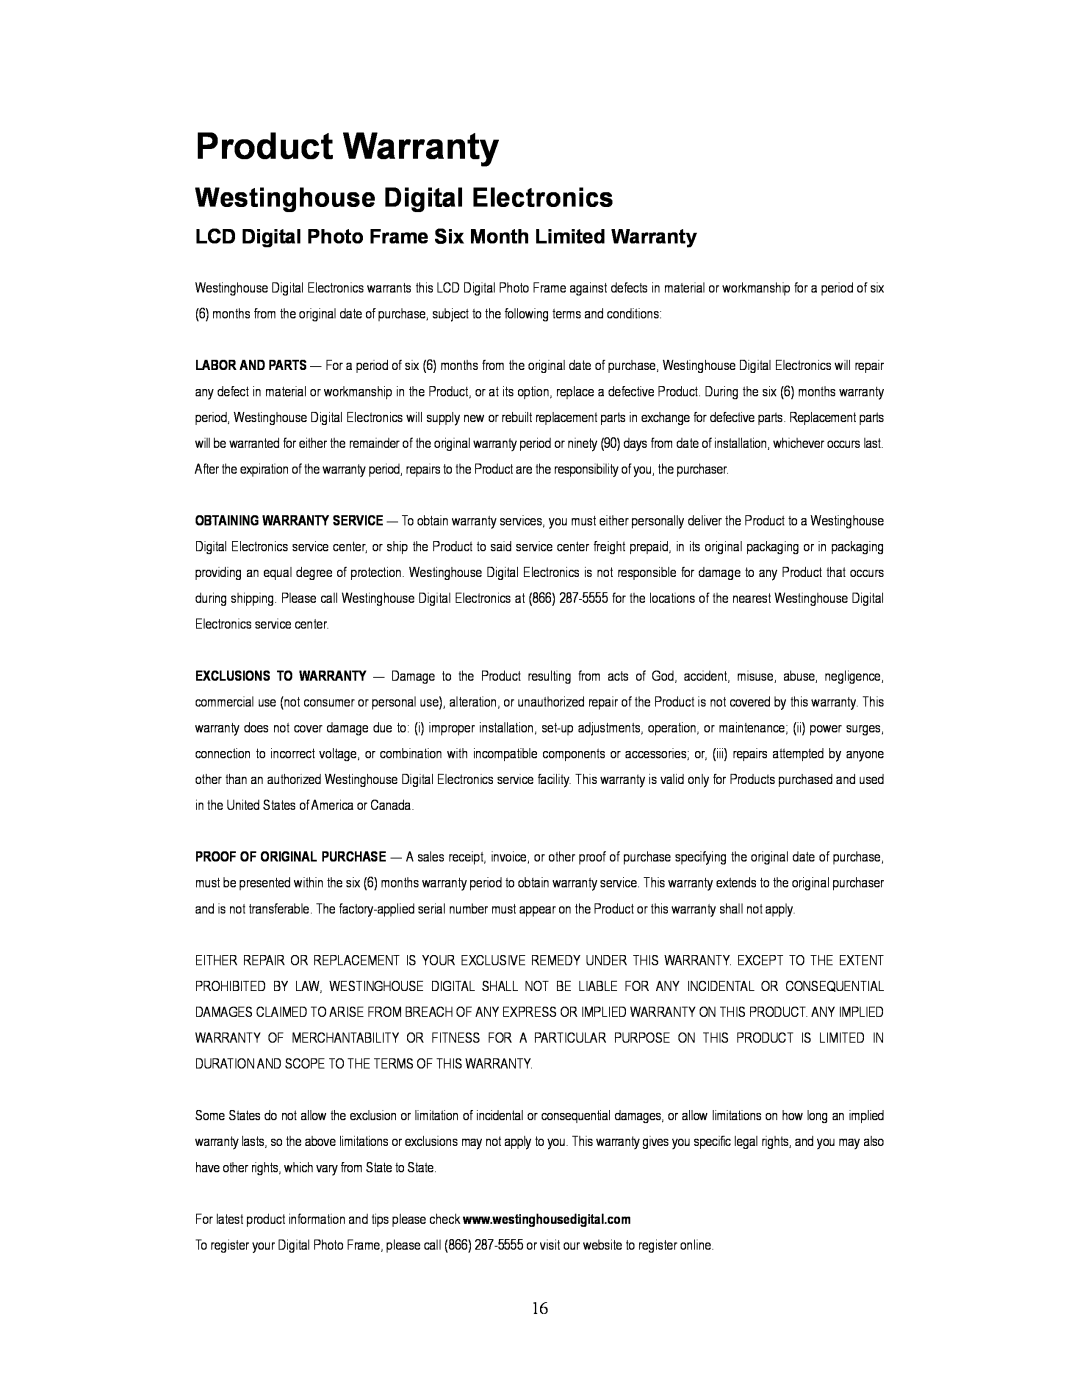 Westinghouse DPF-0701 user manual Product Warranty, Westinghouse Digital Electronics 